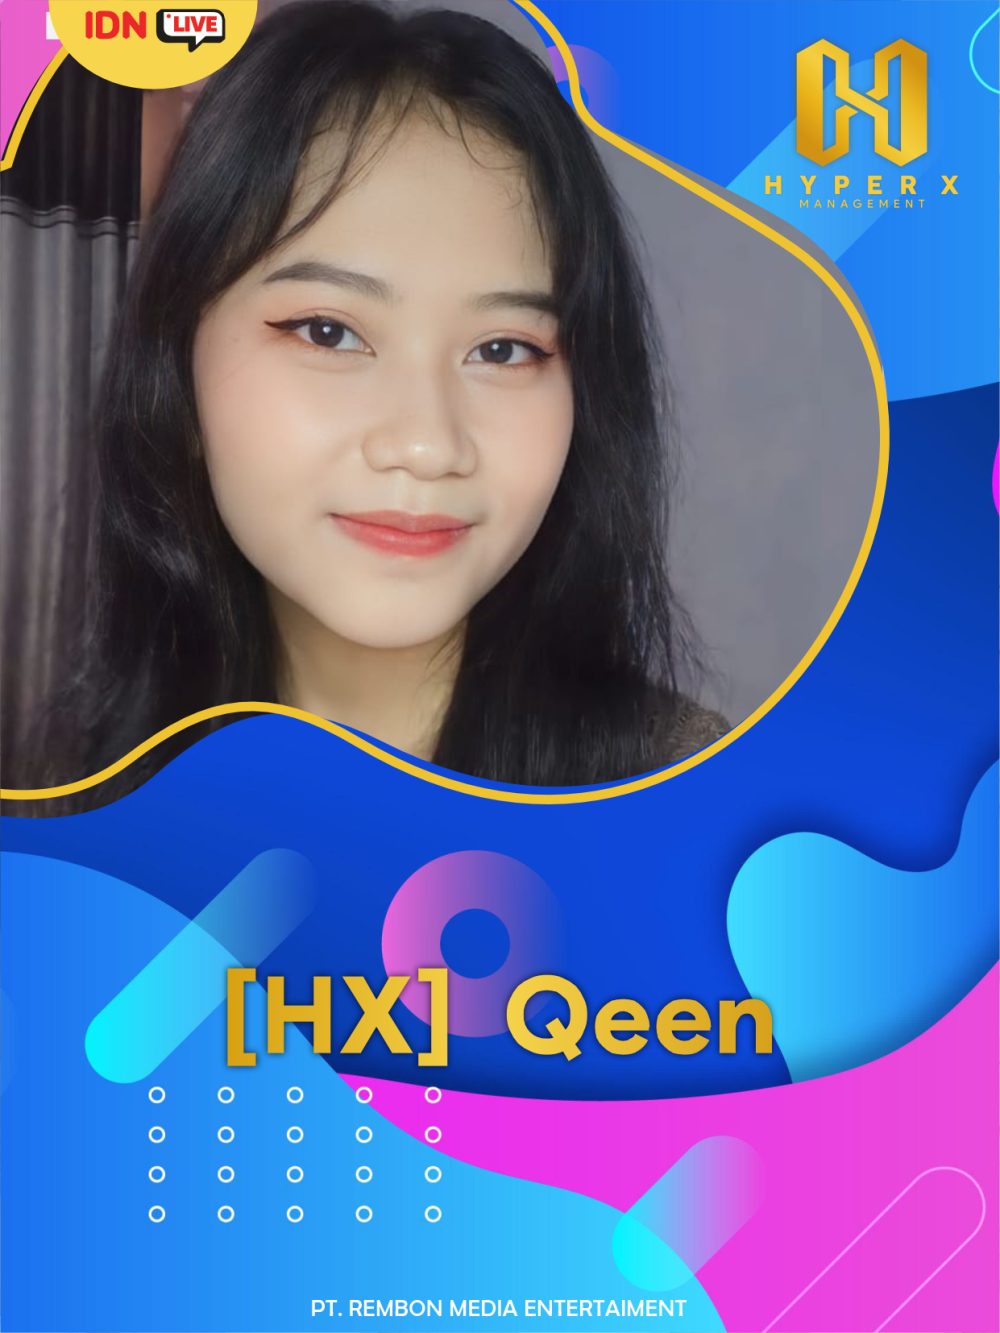 Qeen HX | IDN Live